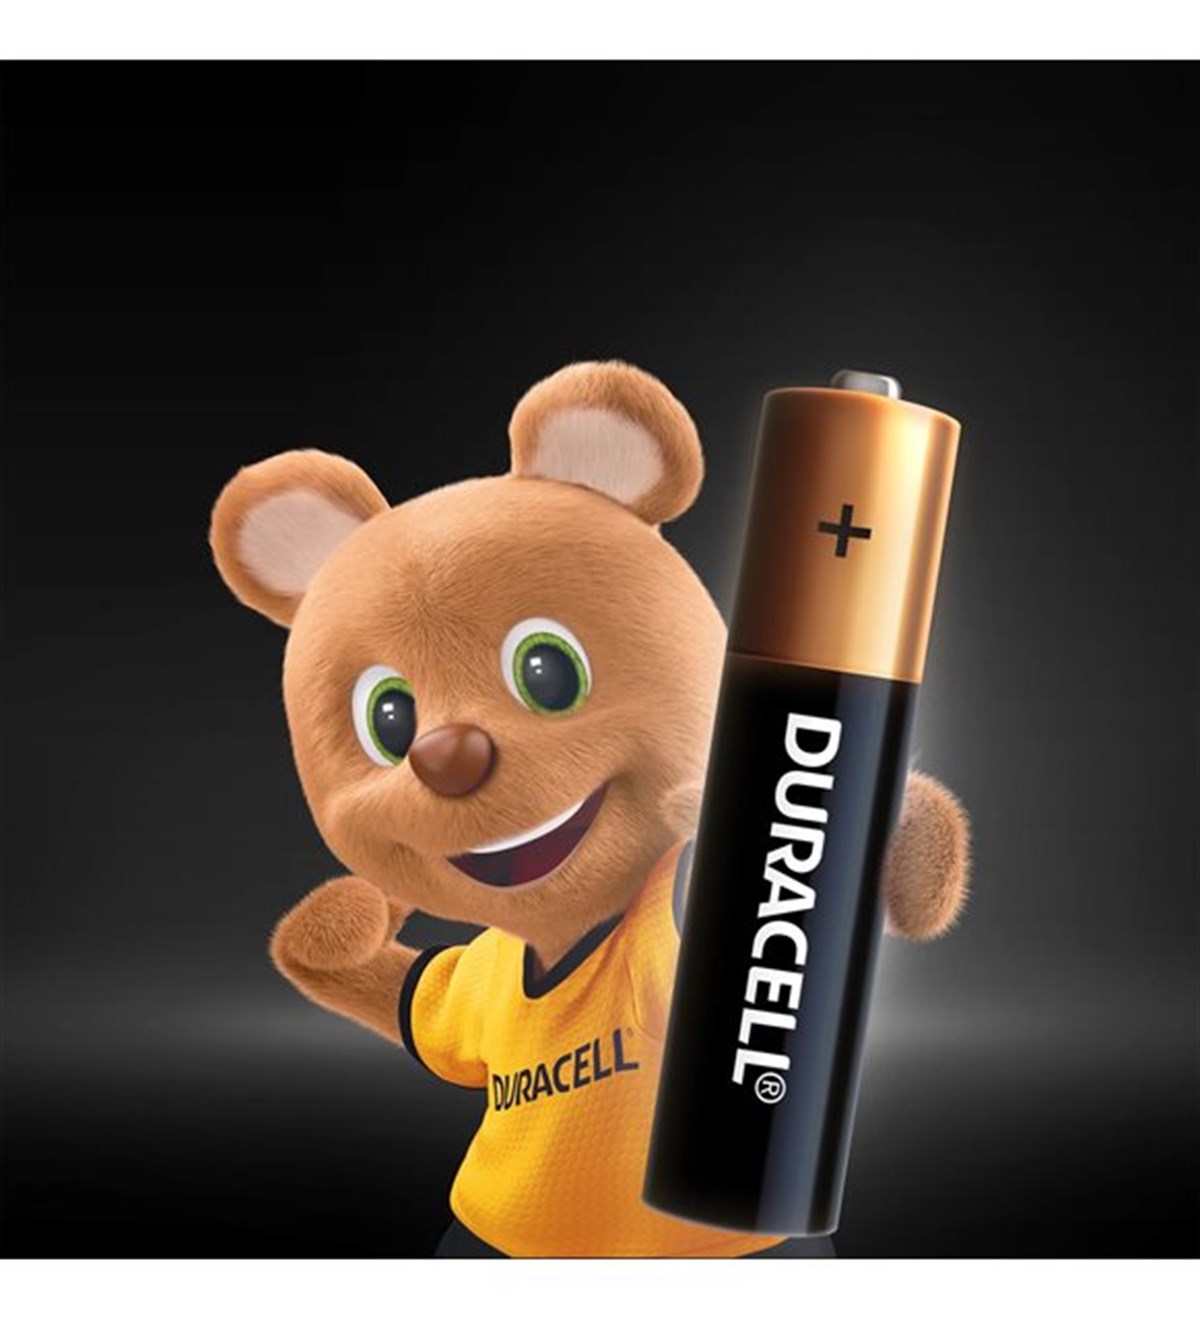 Duracell Turbo Aaa Battery 12 pcs. + With Teddy Bear Gift-LeylekKapida.com